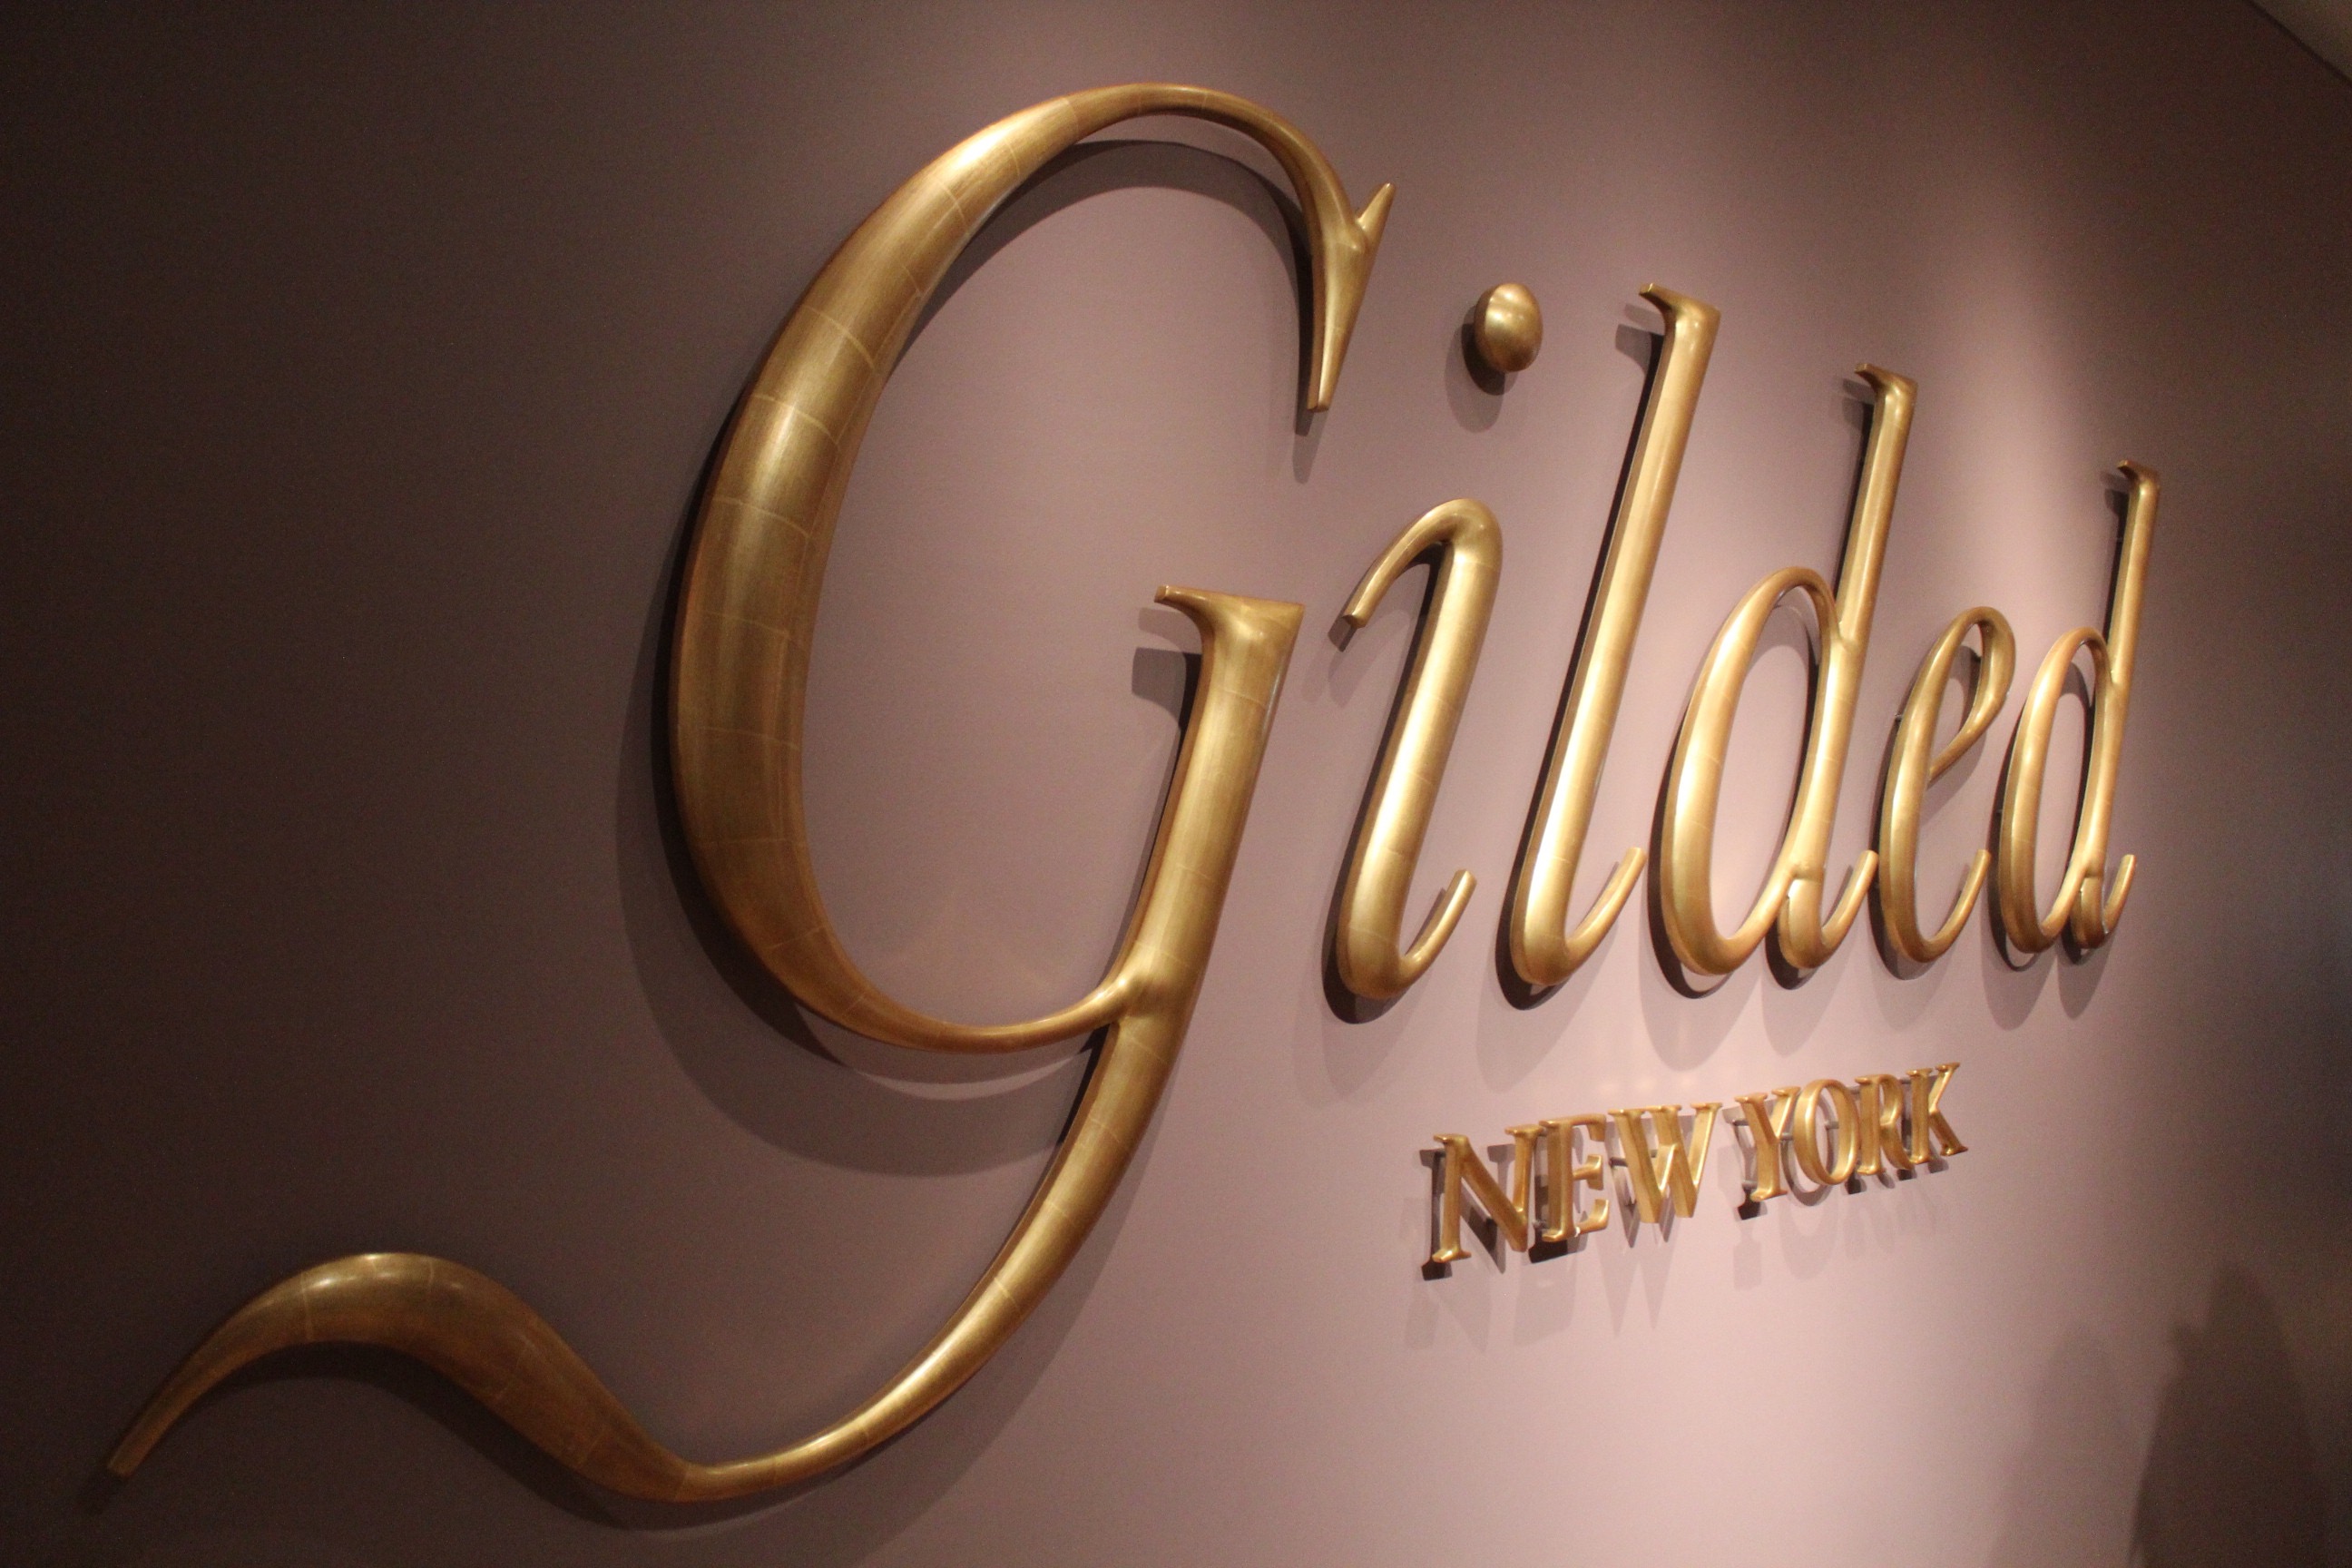 Exhibit Review: Gilded New York